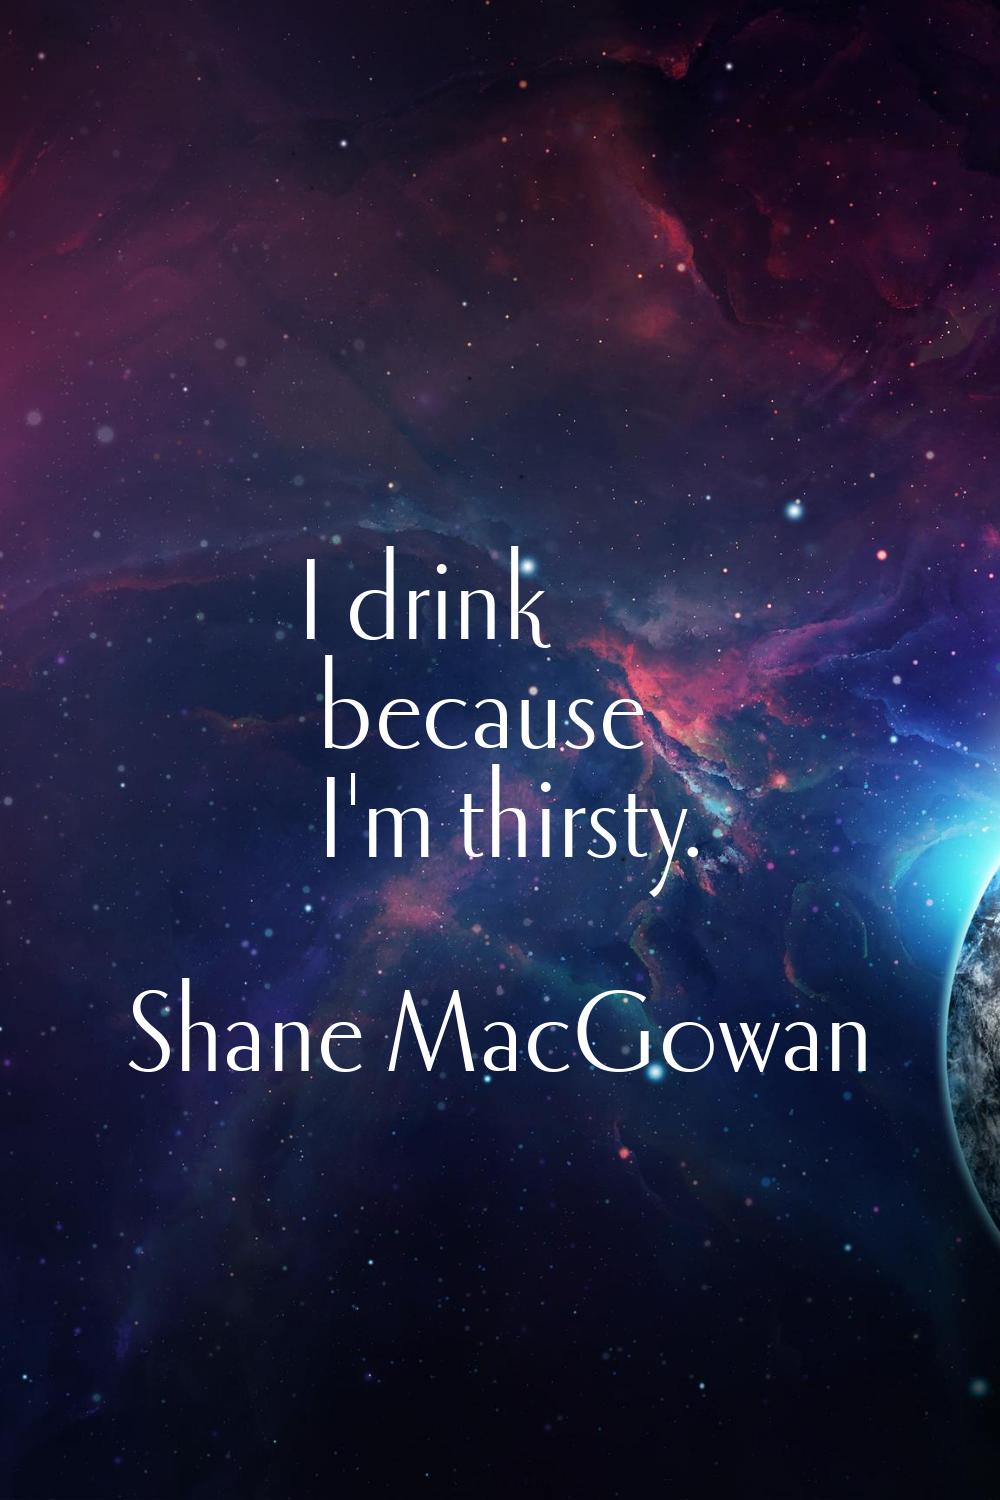 I drink because I'm thirsty.